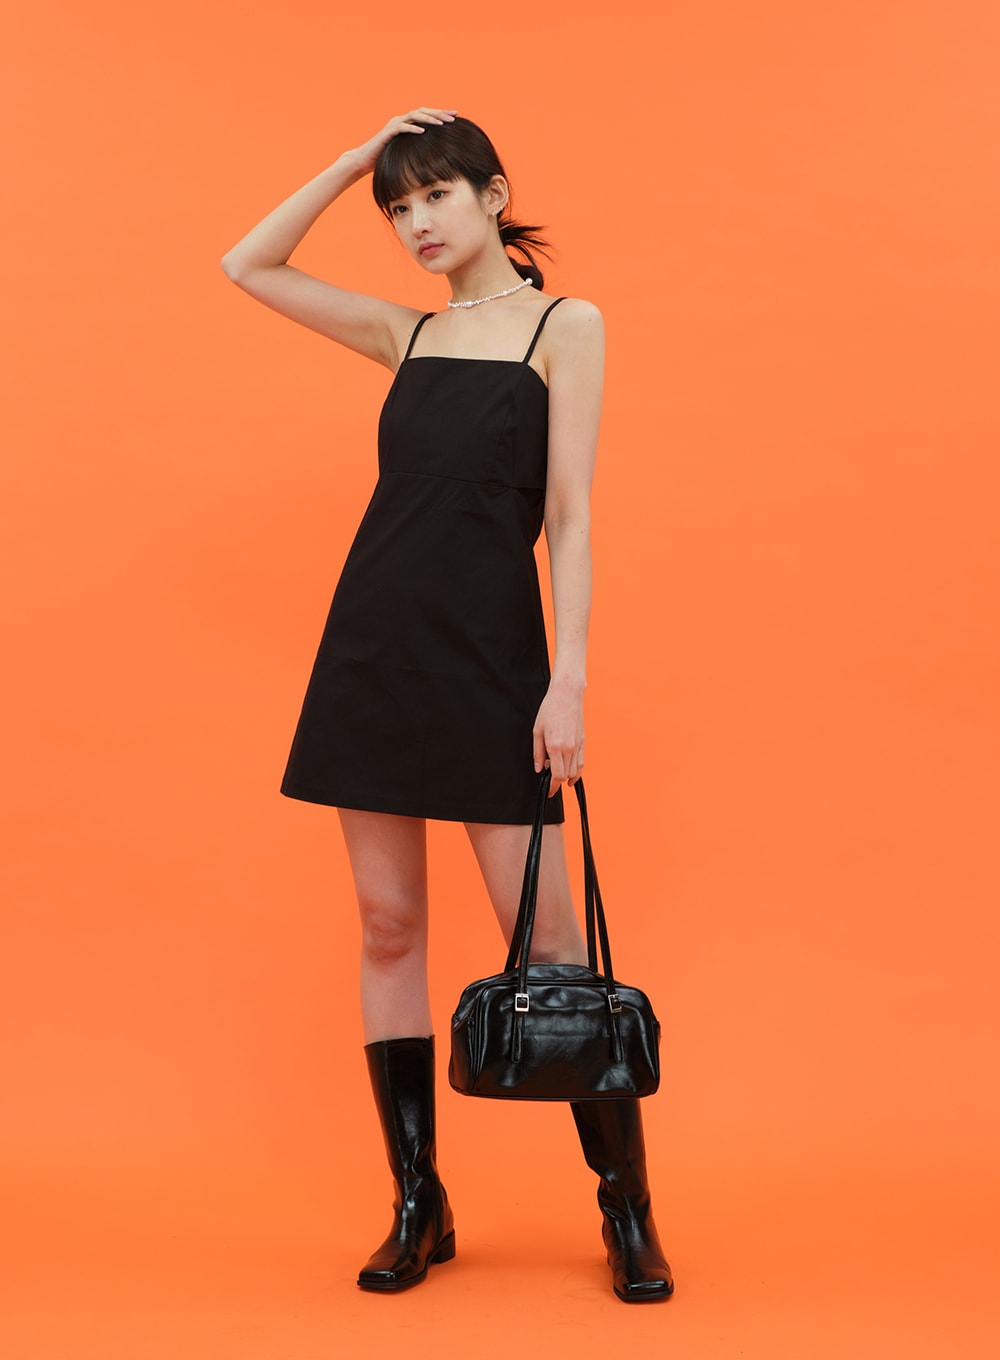 Mini Strap Sleeveless Dress C1703